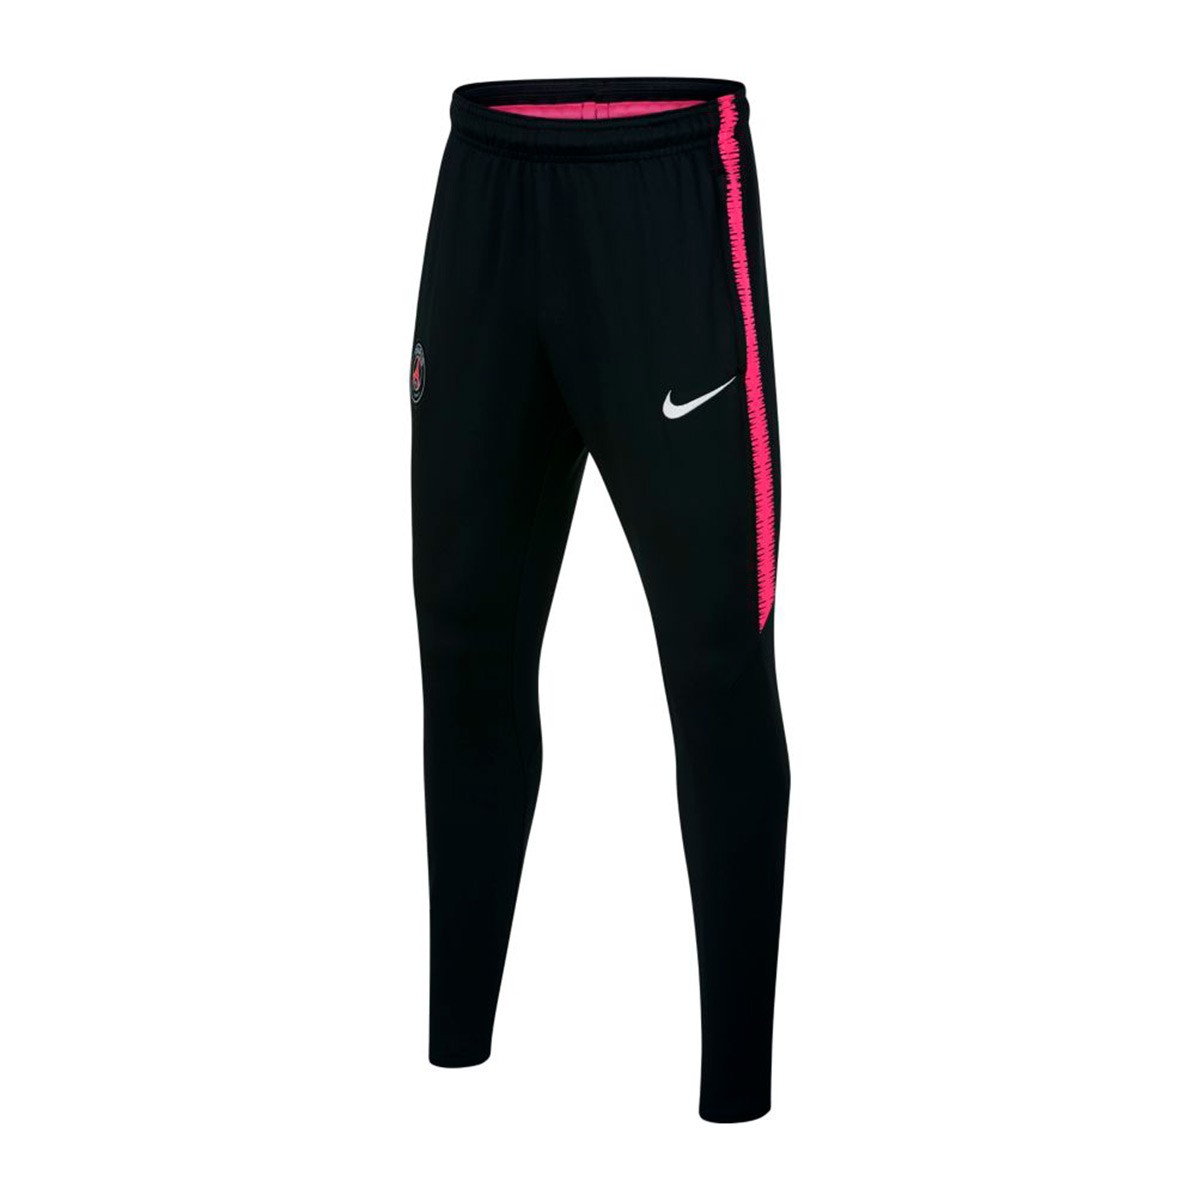 Pantaloni lunghi Nike Paris Saint-Germain Dry Squad 2018-2019 Junior  Black-Hyper pink-White - Negozio di calcio Fútbol Emotion